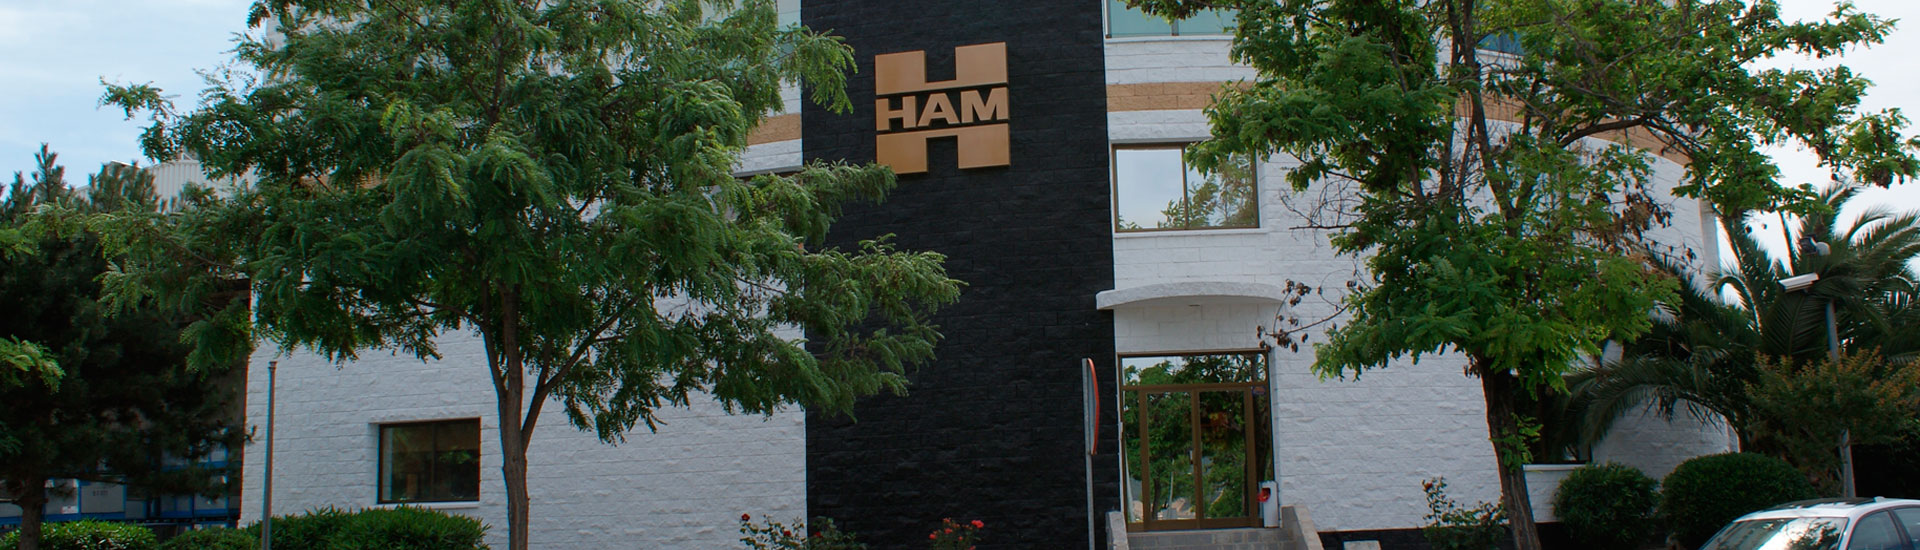 Grupo HAM se encuentra en el Polígono Sant Ermengol, parcela 11. Abrera, Barcelona. GPS: 41.518785, 1.892046